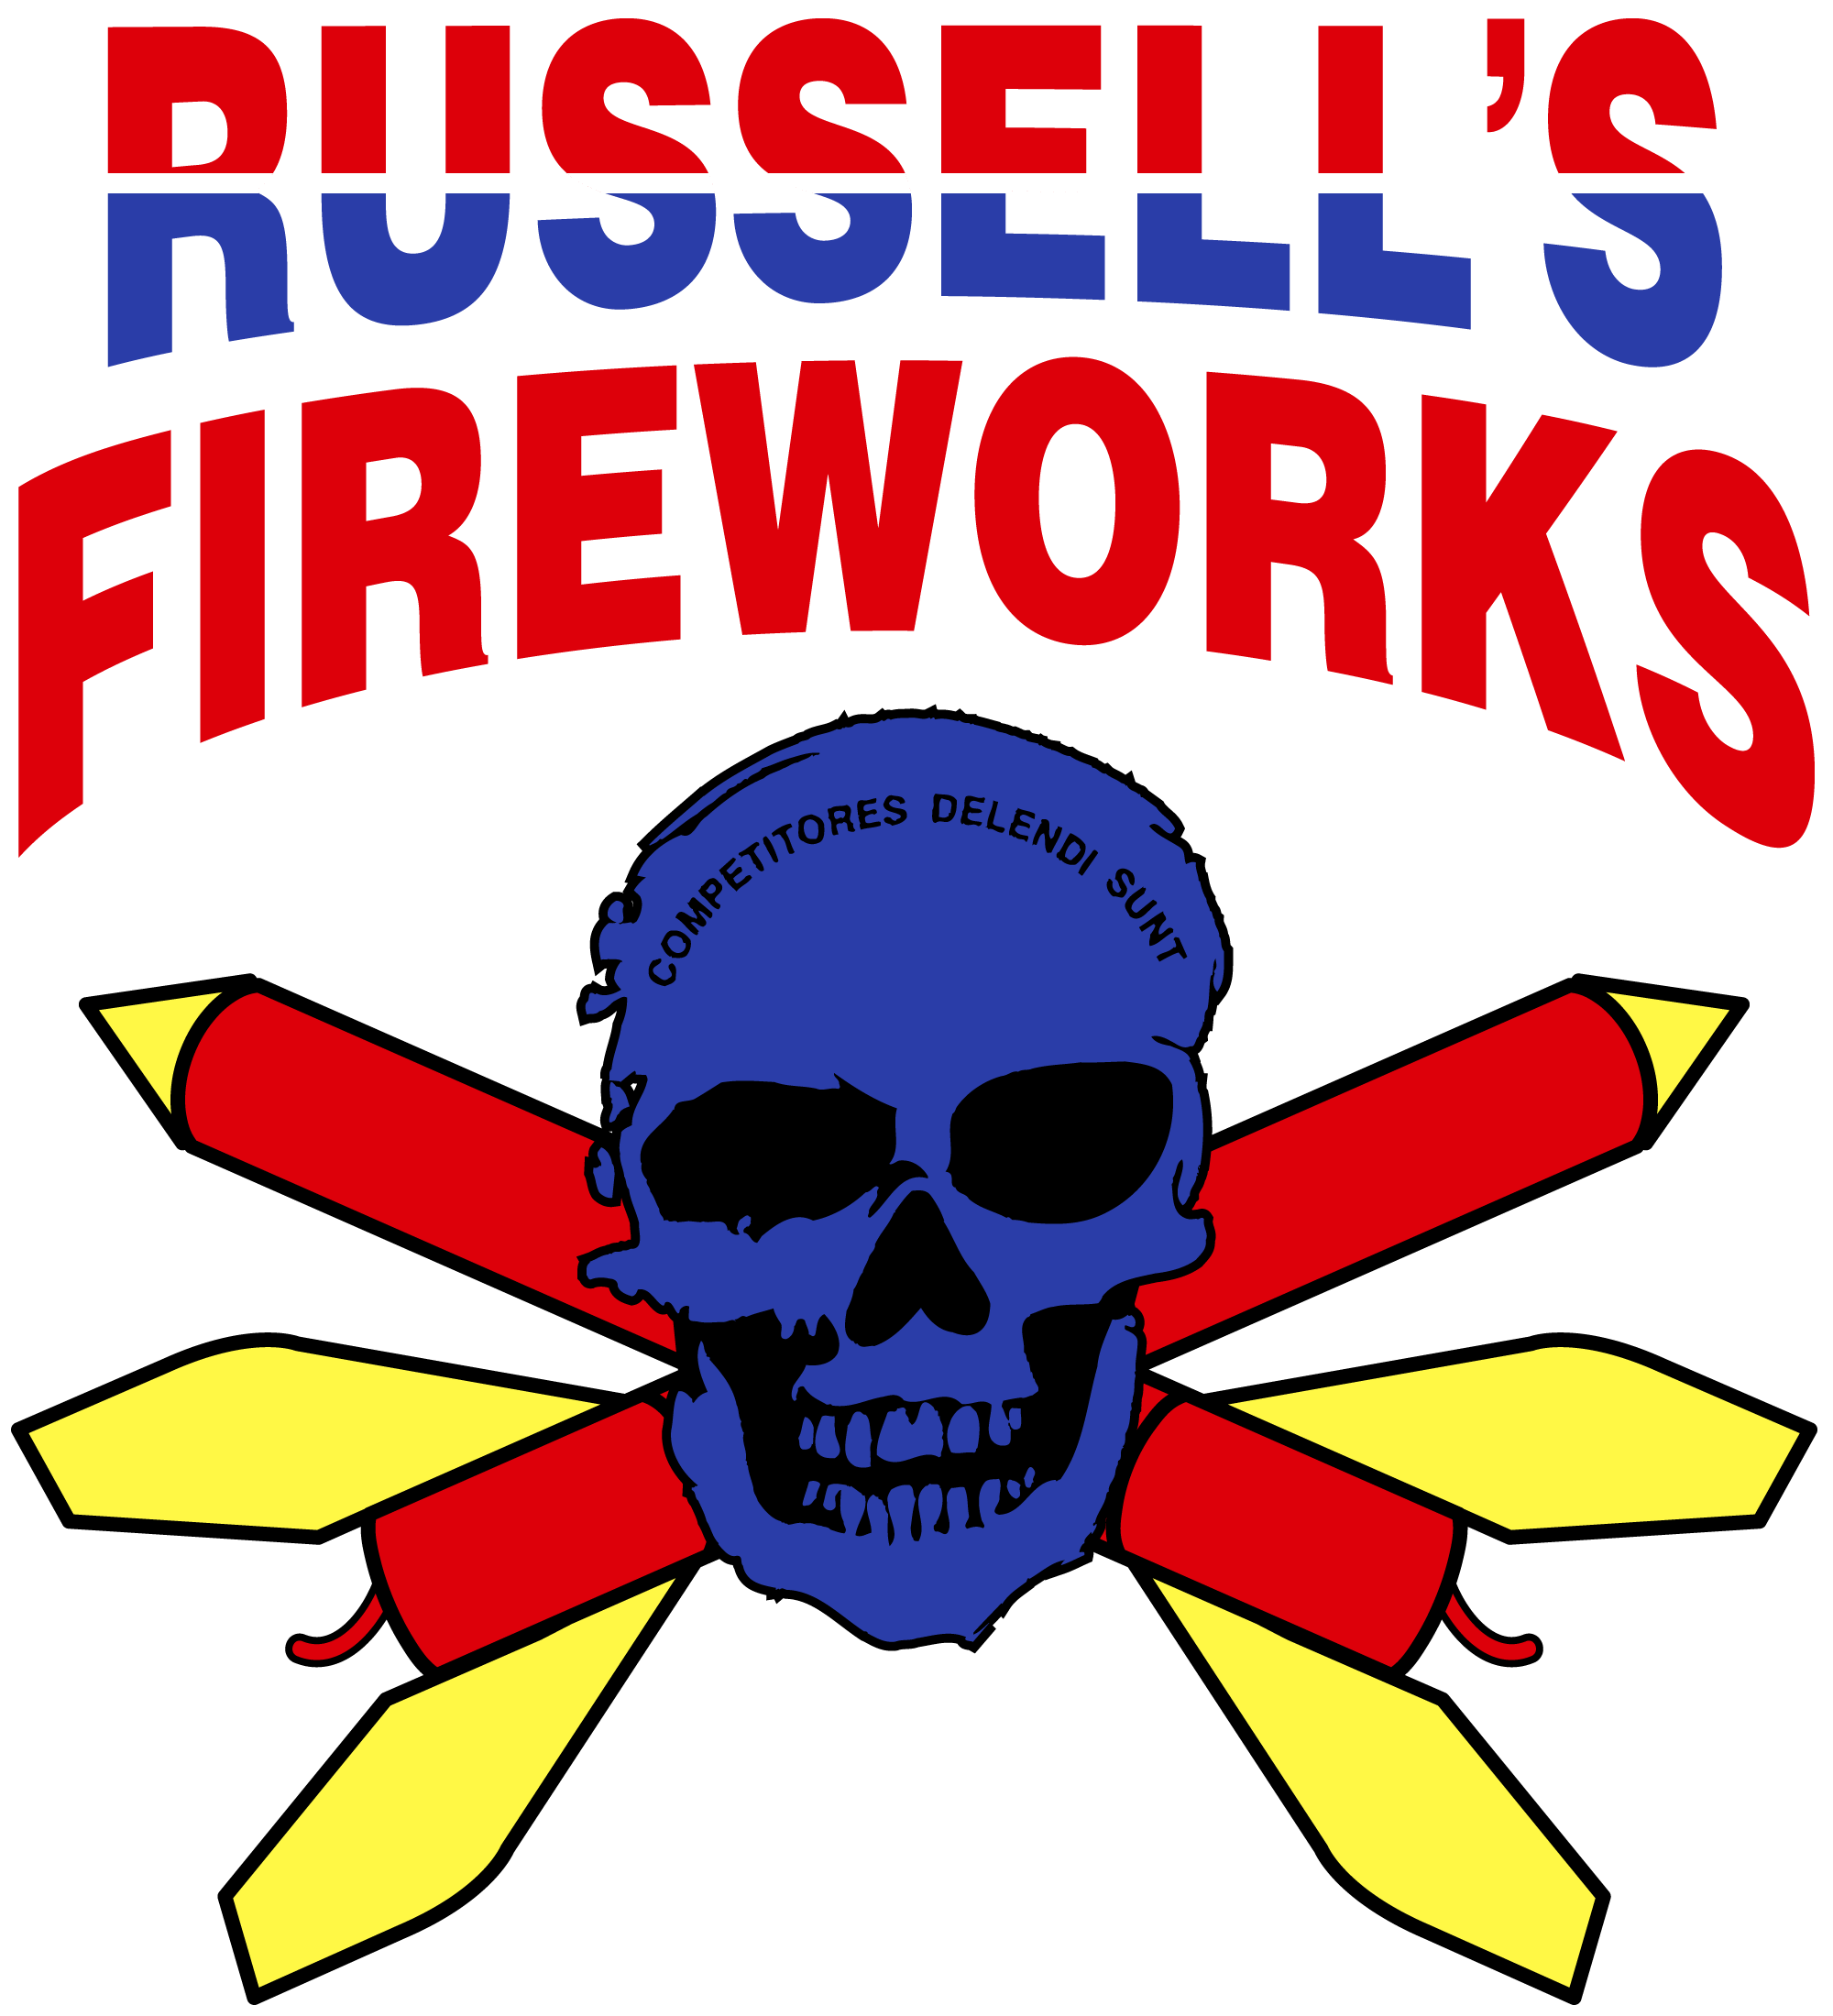 russells fireworks logo image